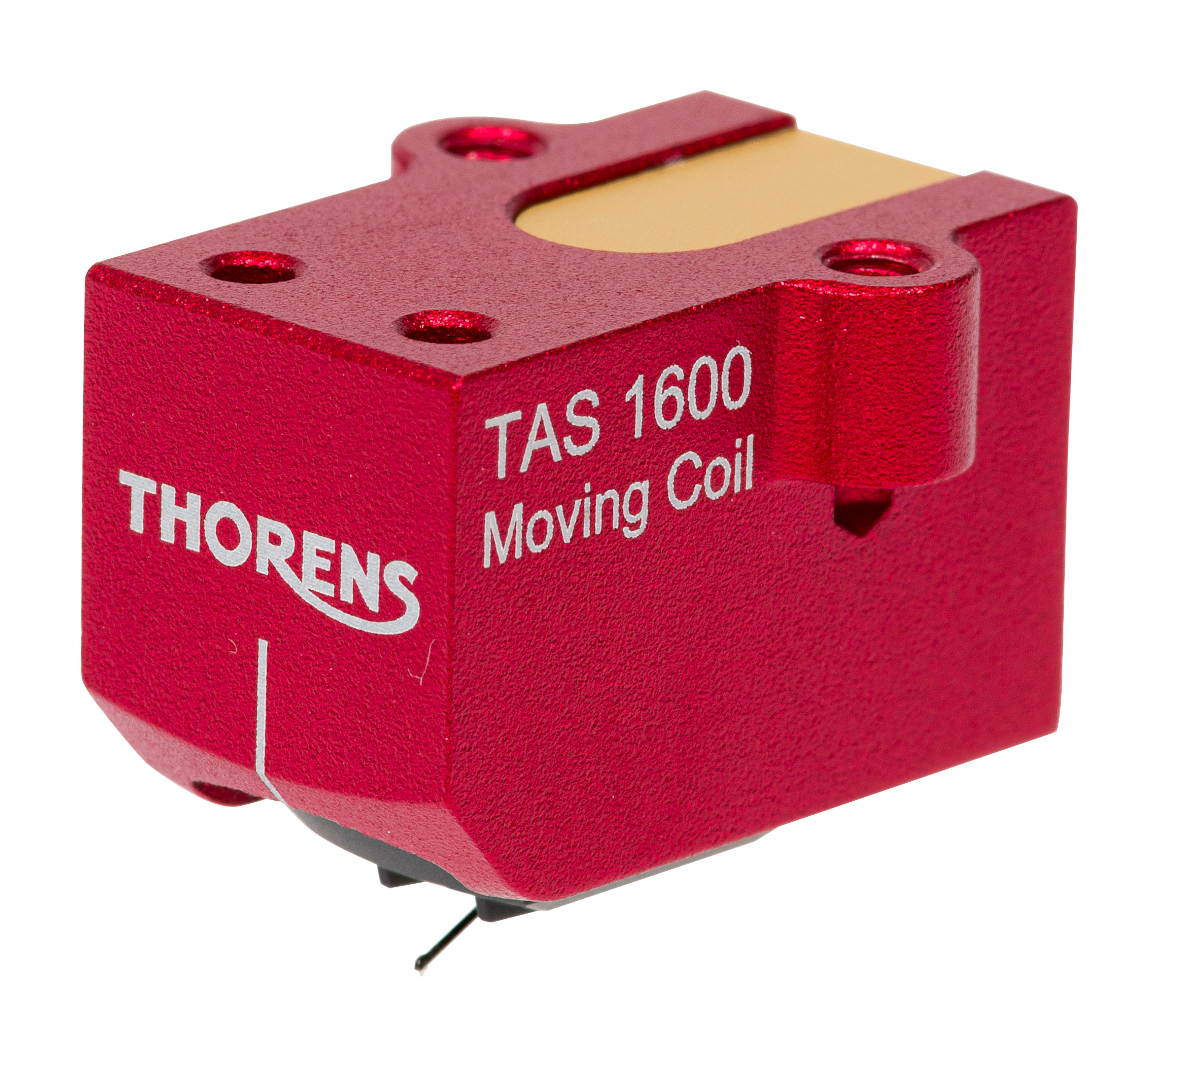 Thorens cartridge TAS 1600 MC 